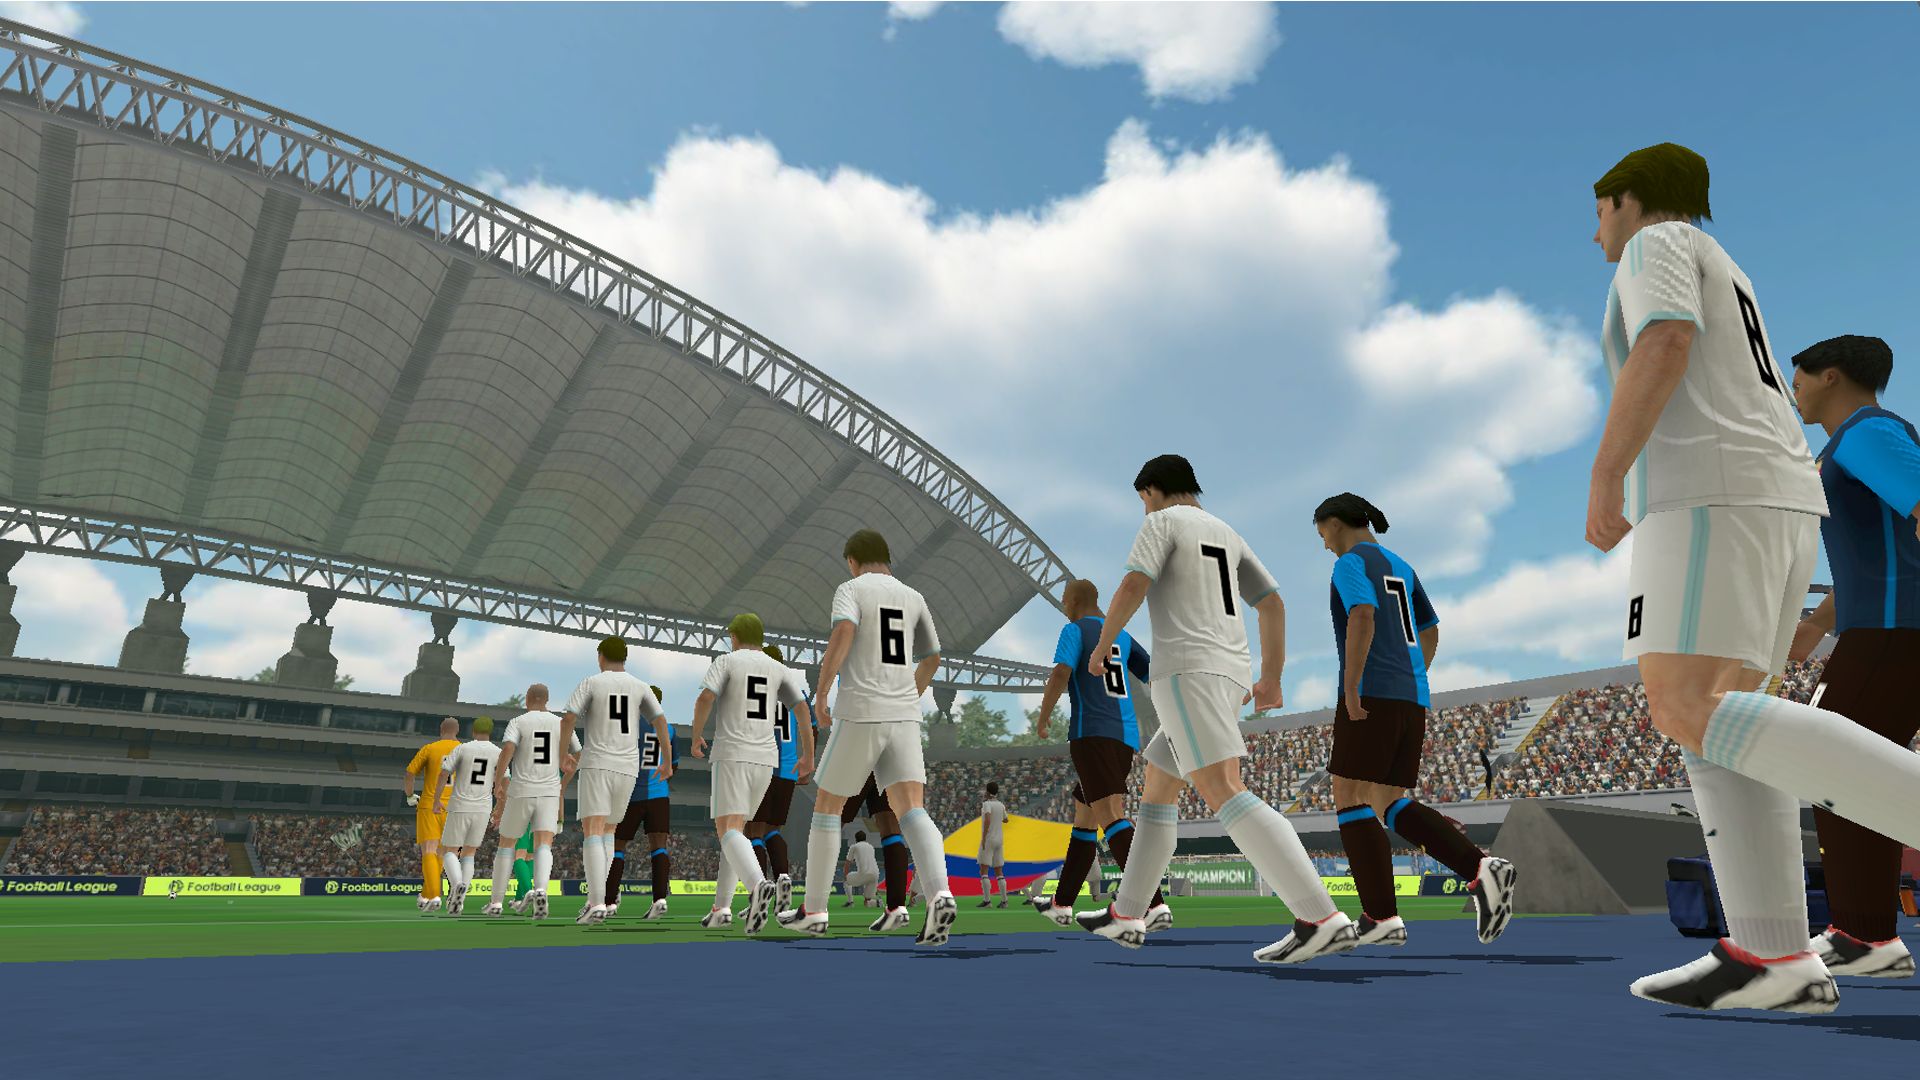 Football League 2023 - Android game screenshots.